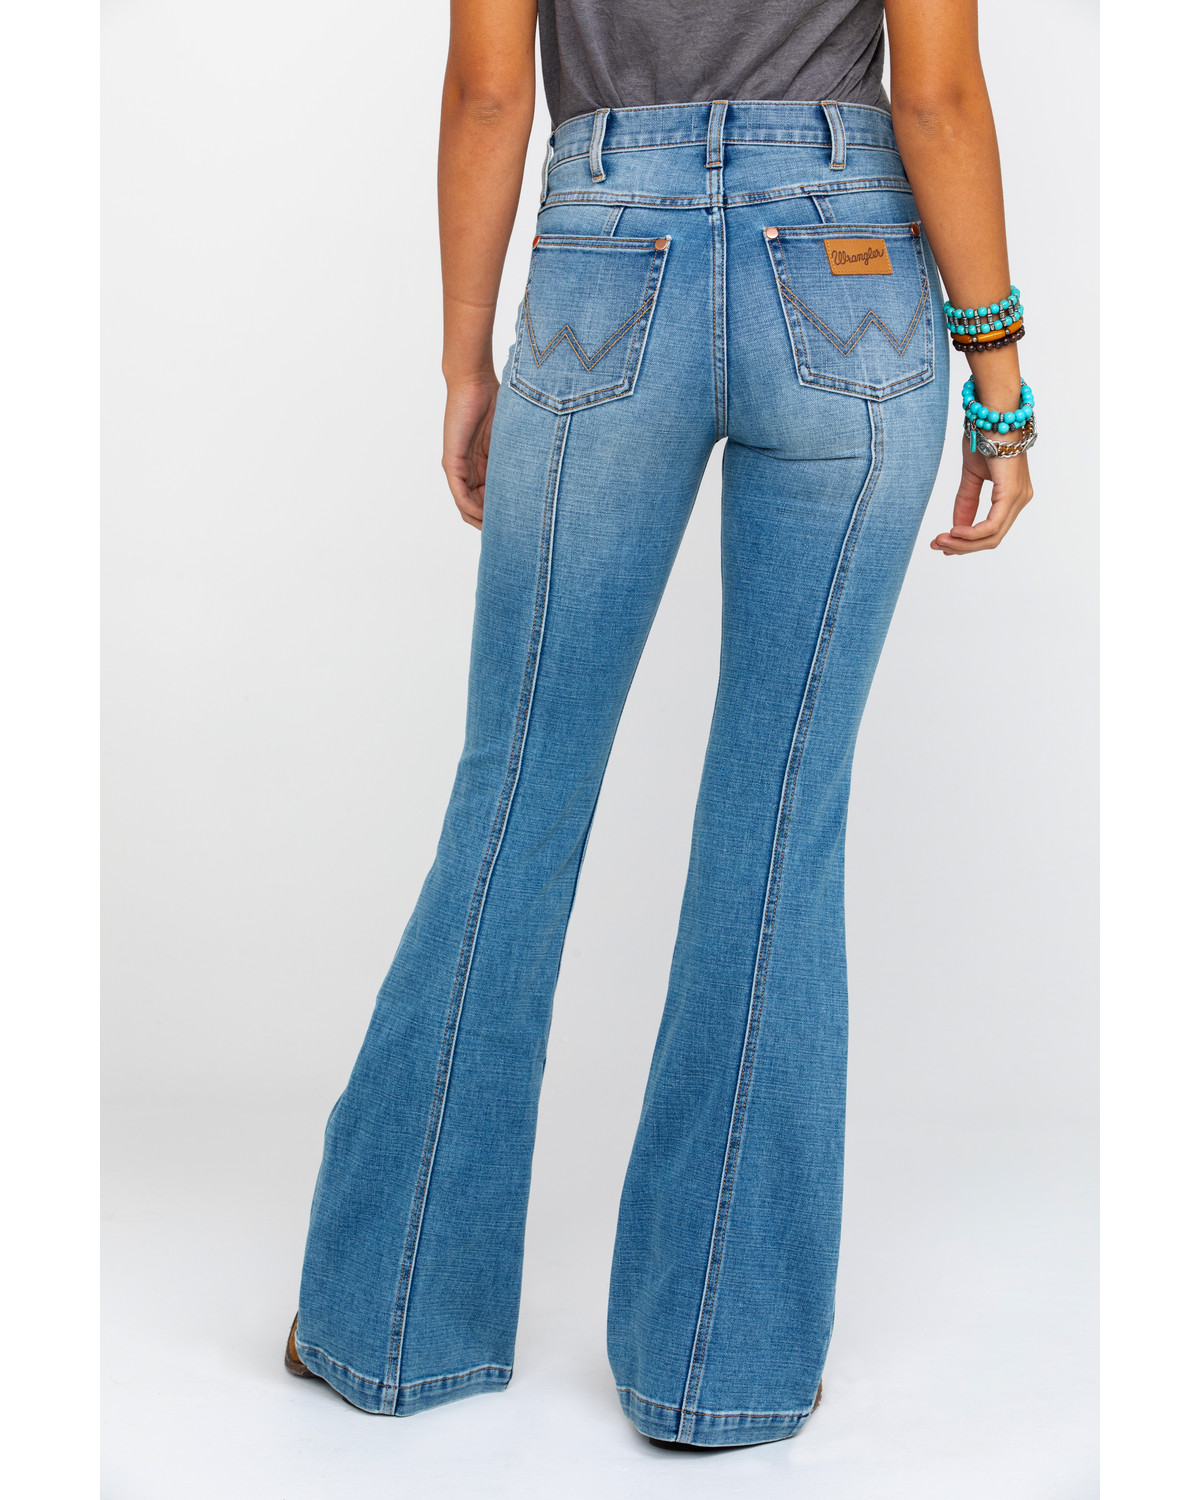 Wrangler womens flare jeans - australia The Ultimate bedeutung super ...